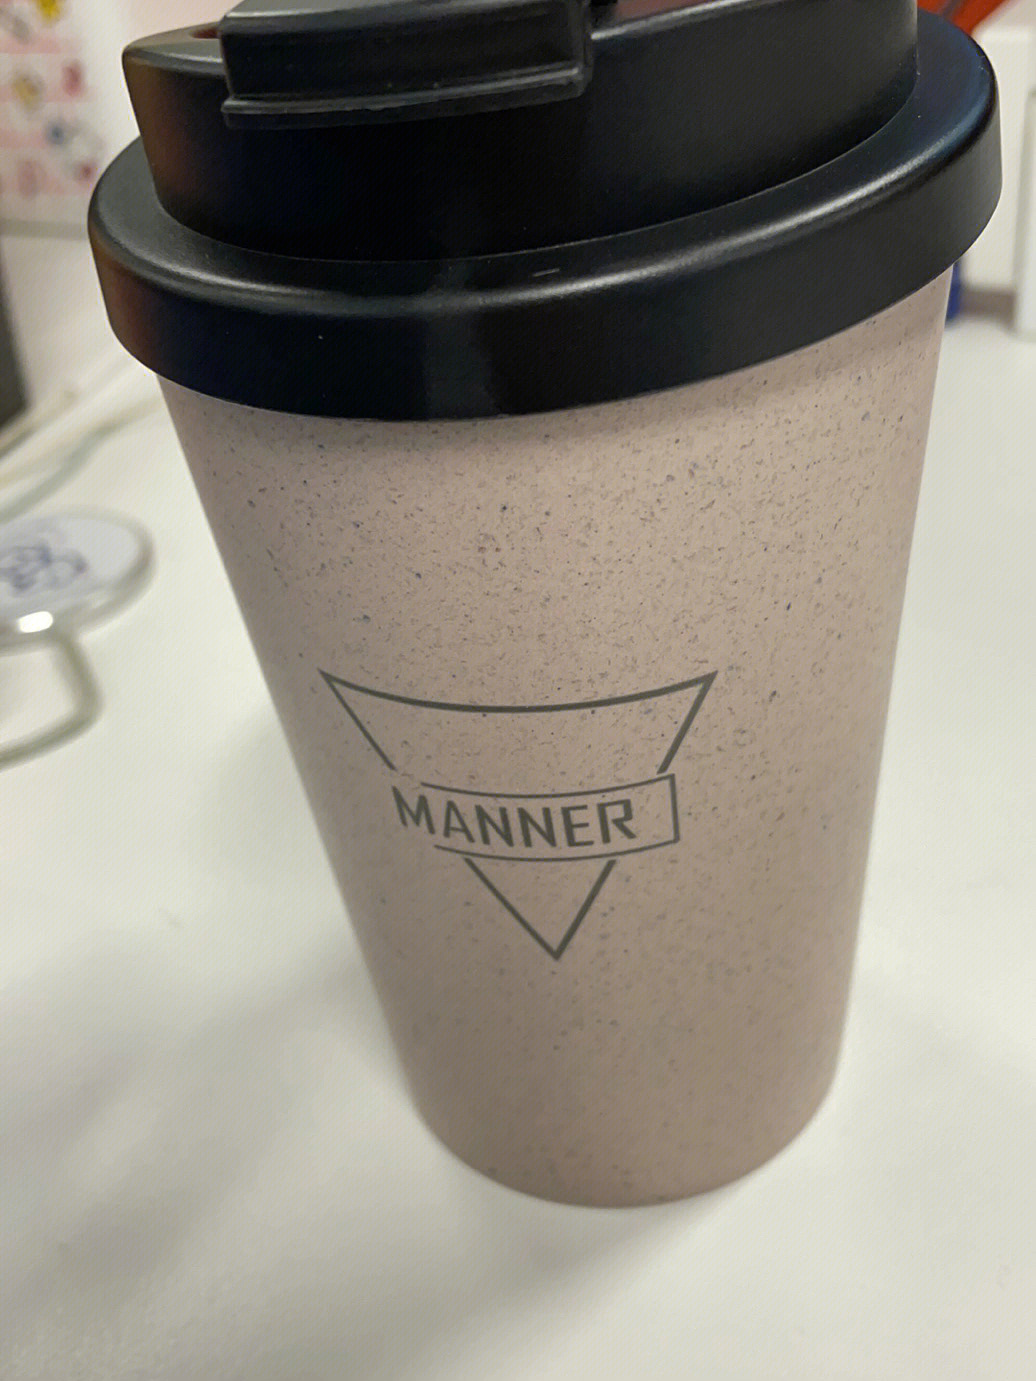 manner咖啡渣杯图片